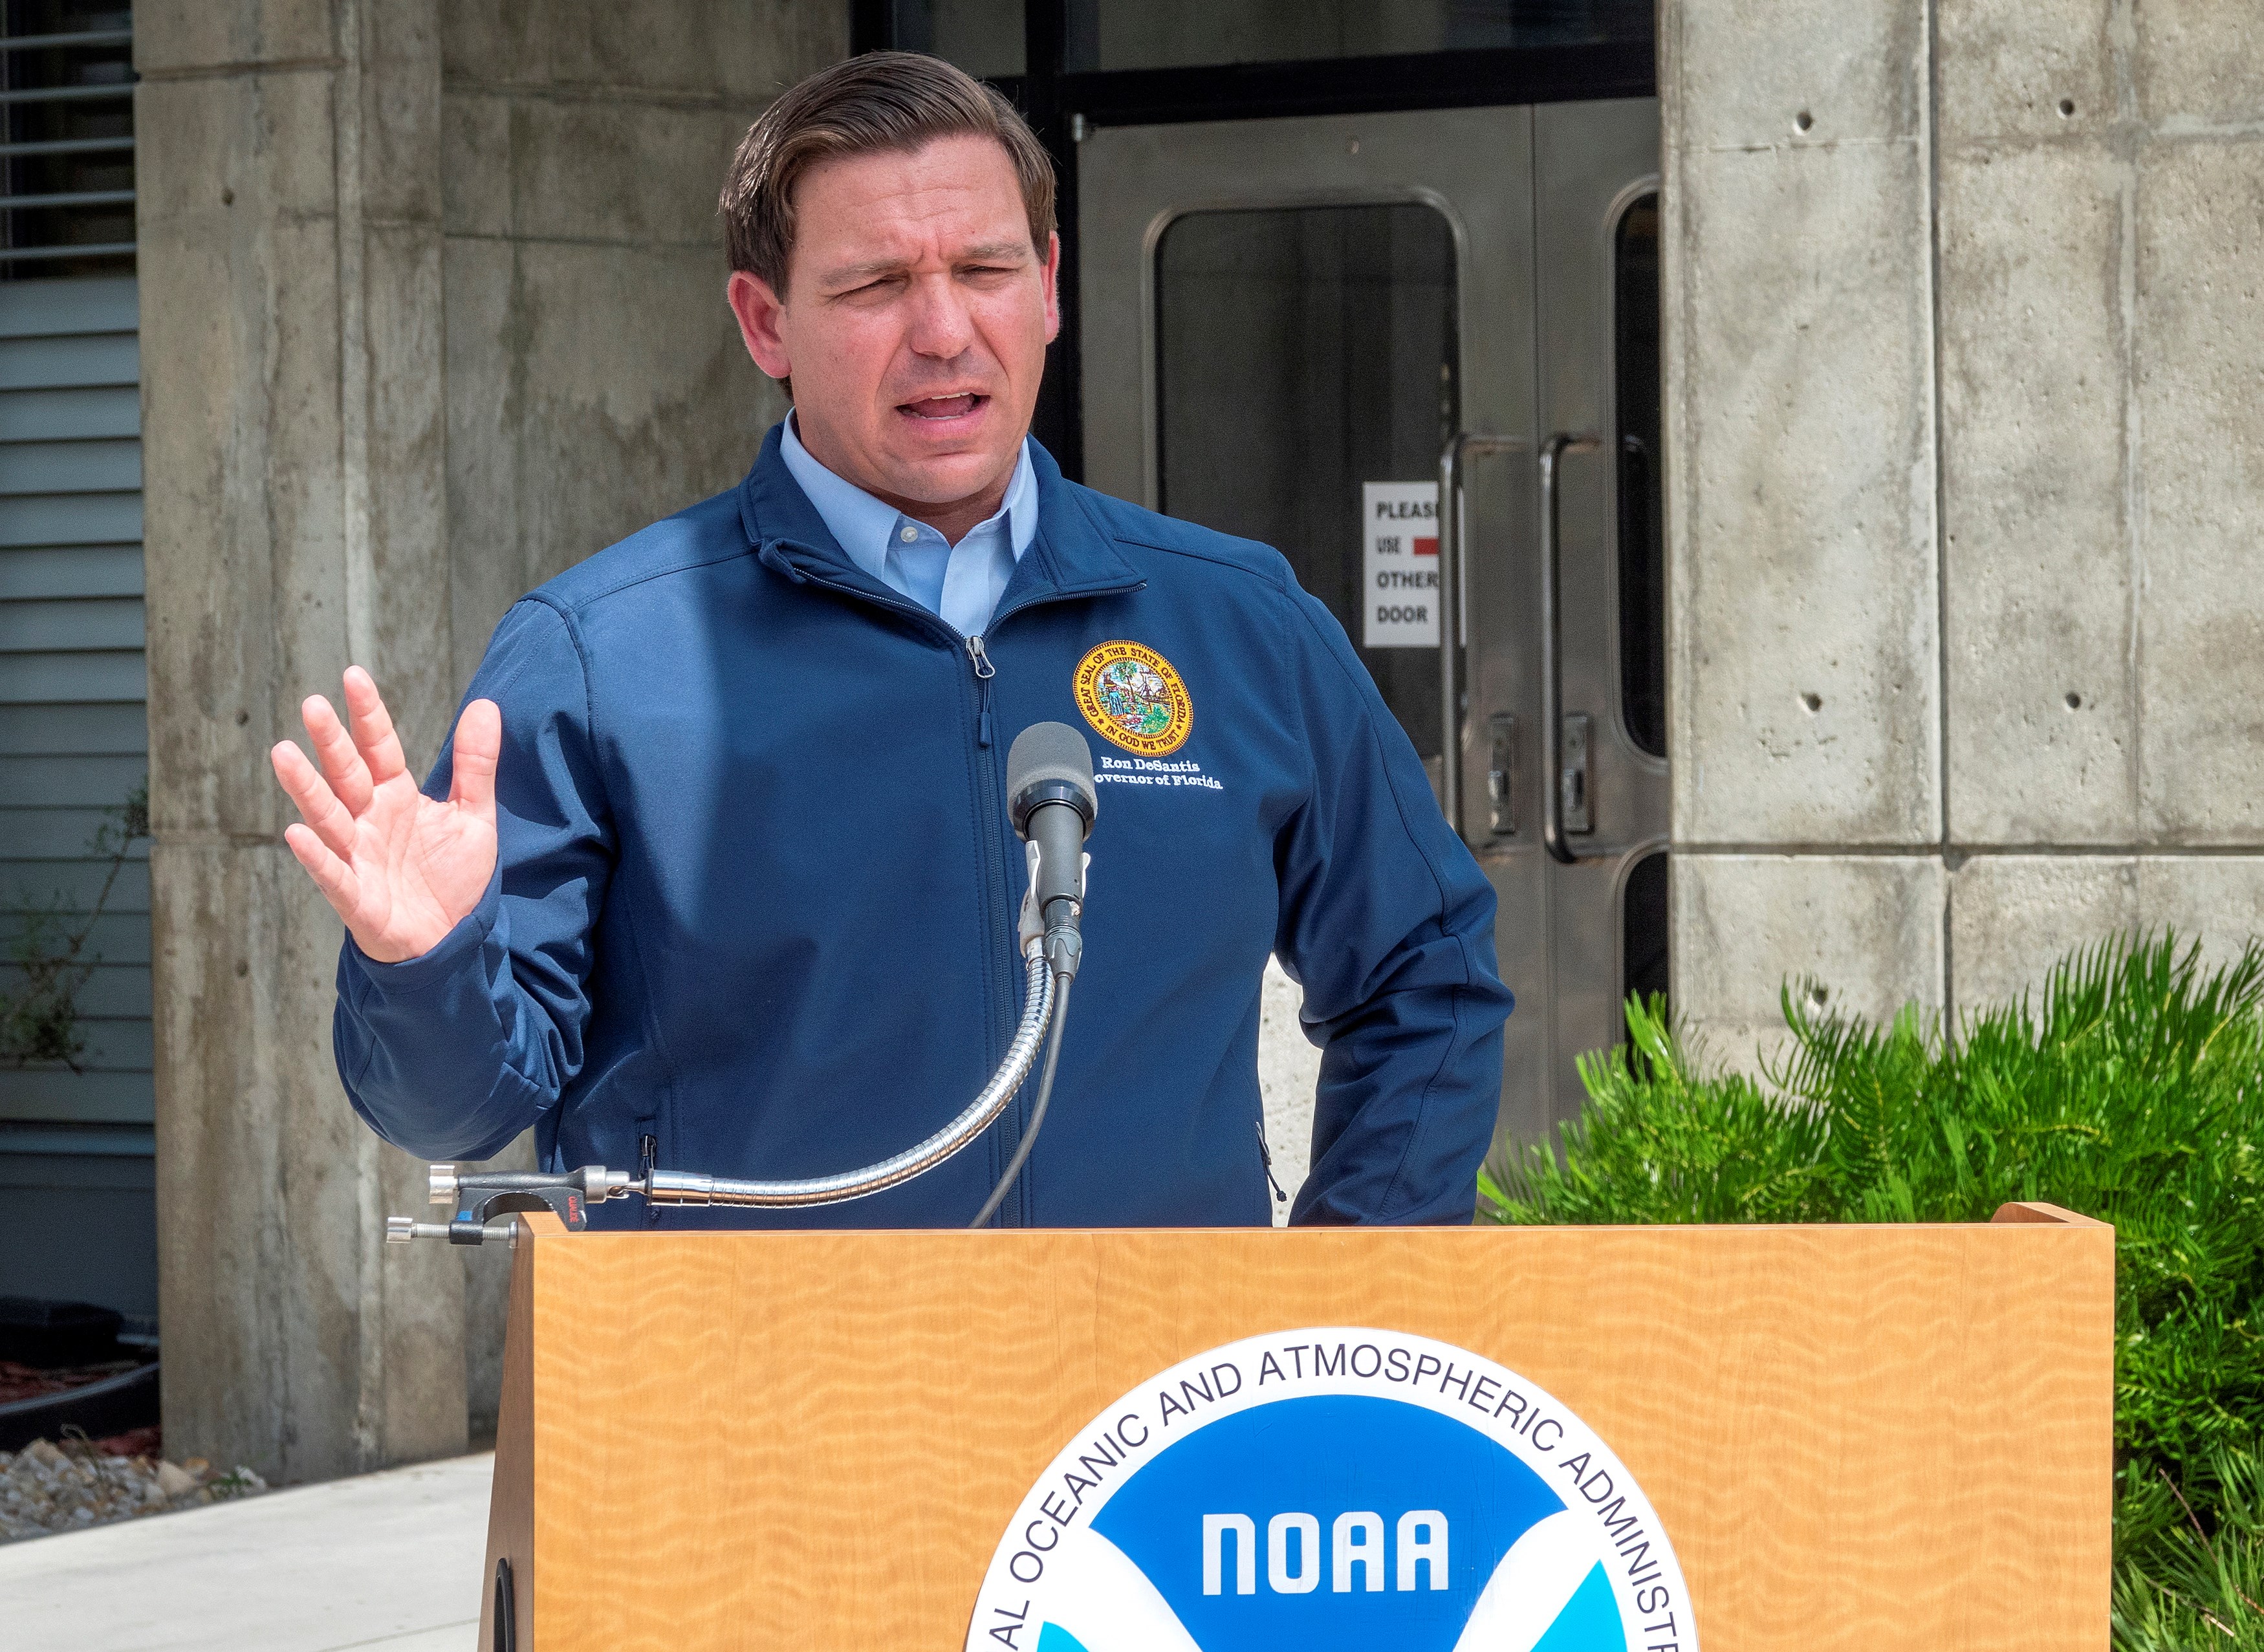 Gobernador de Florida declara estado de emergencia por el huracán Dorian (FOTOS)